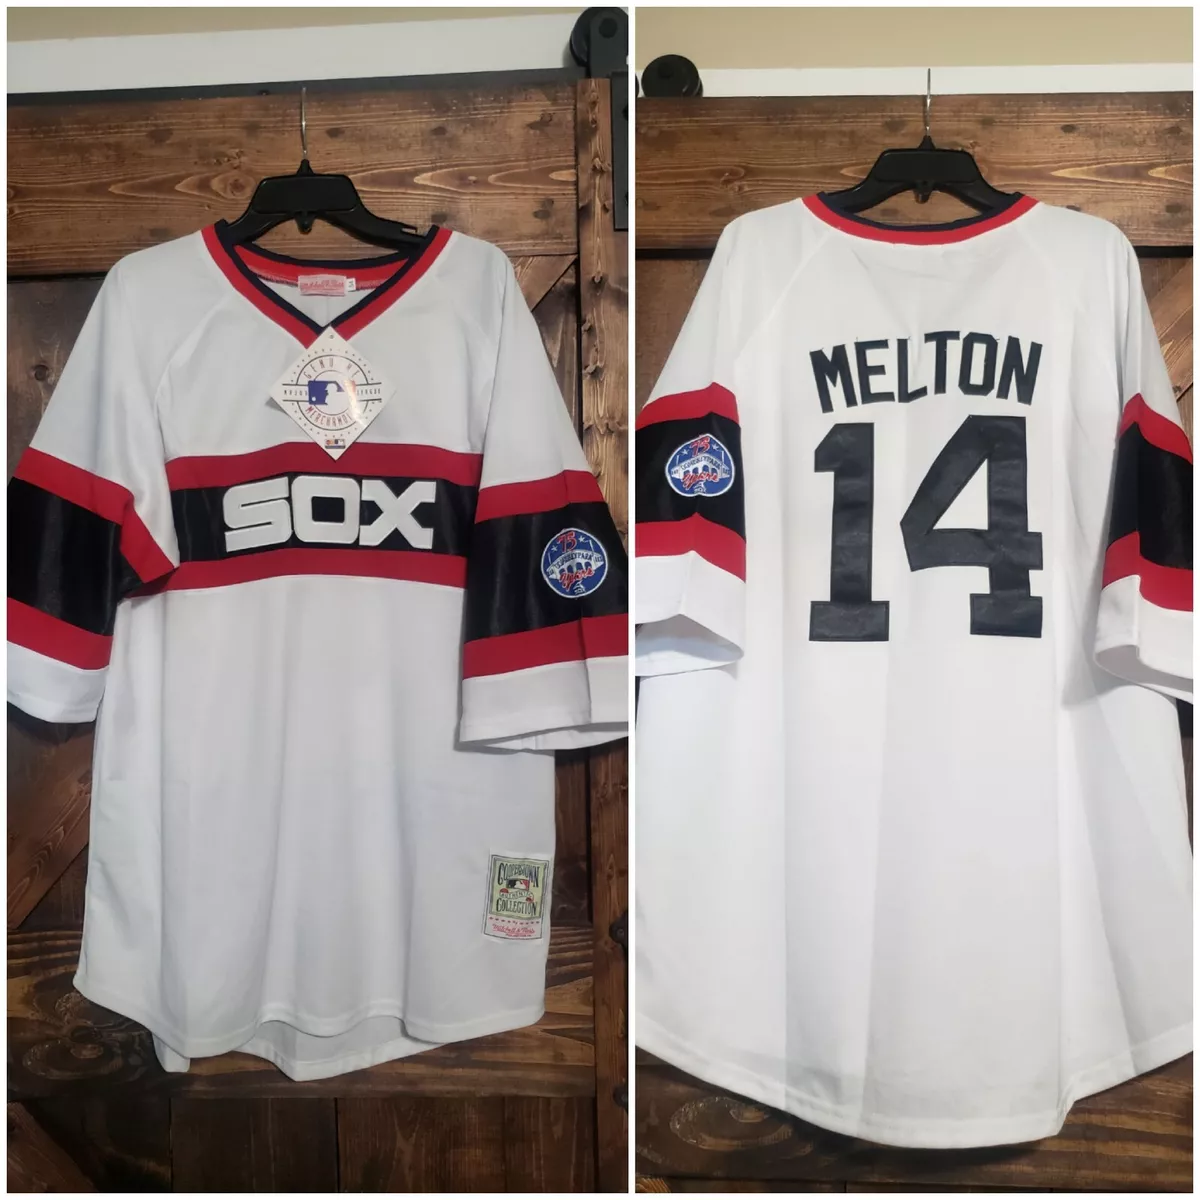 NWT Chicago White Sox Bill Melton 'Beltin' Melton' 80s Throwback Jersey  Comiskey